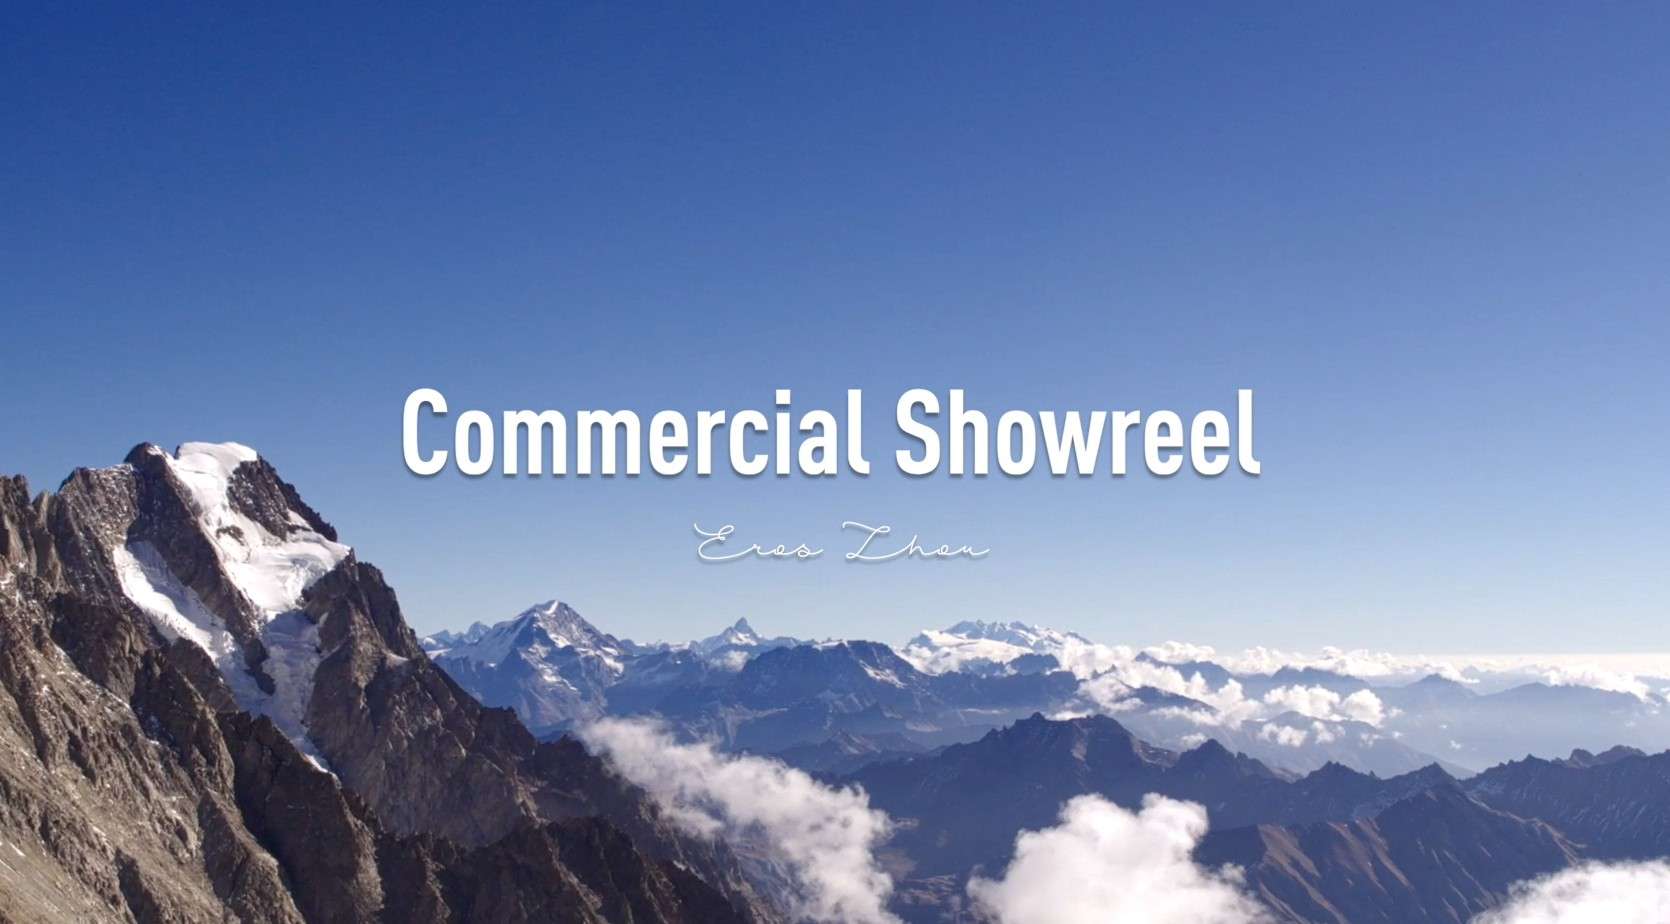 Commercial Showreel 2020商业短片作品集